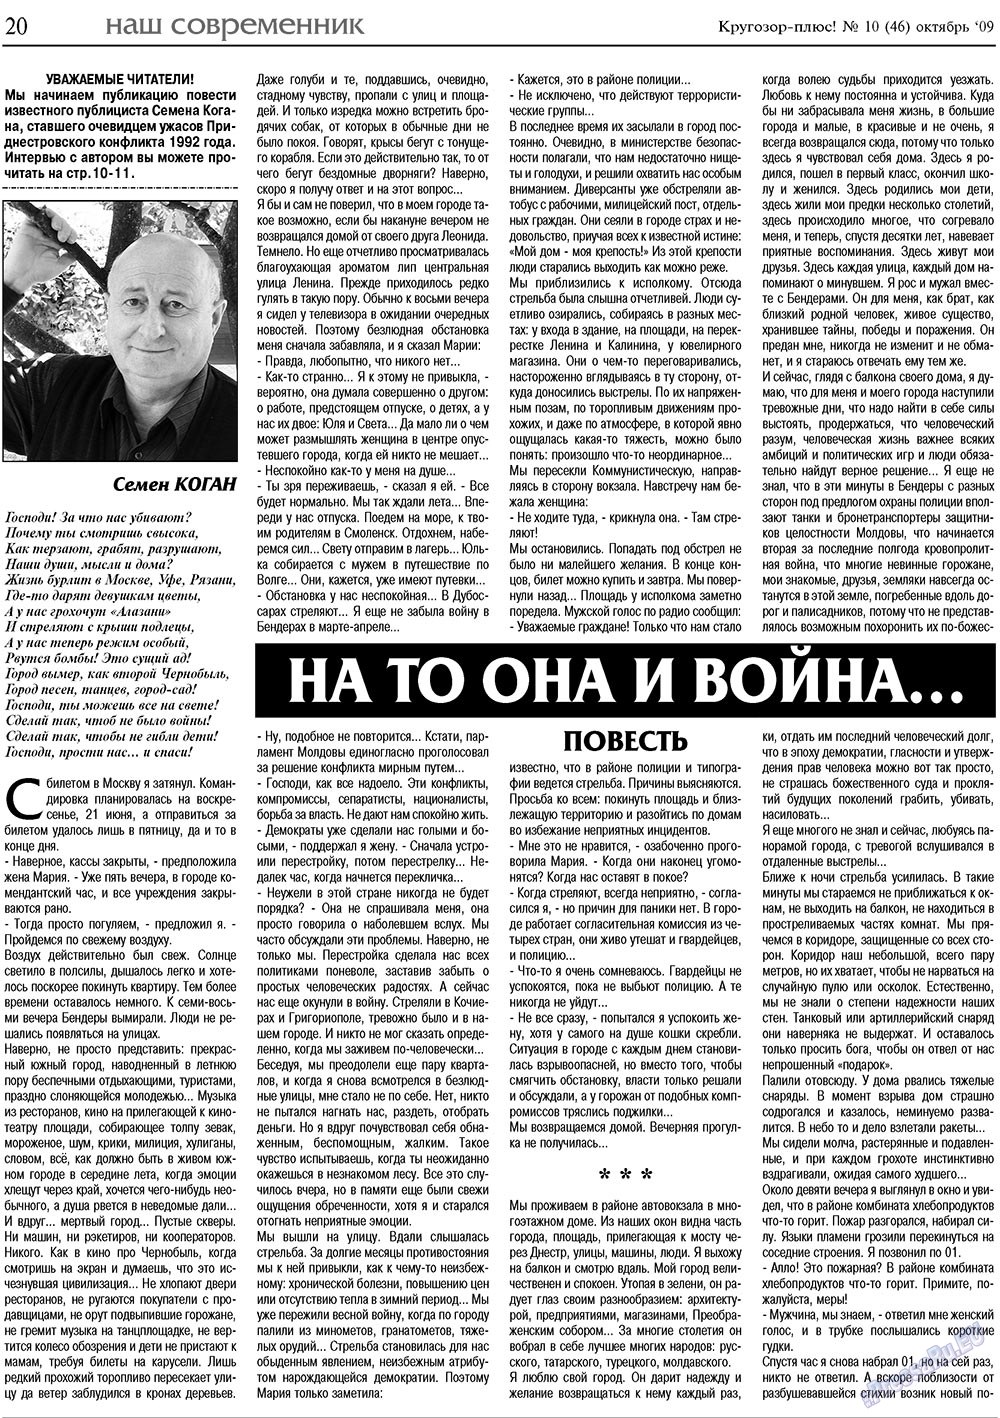 Кругозор плюс! (газета). 2009 год, номер 10, стр. 20